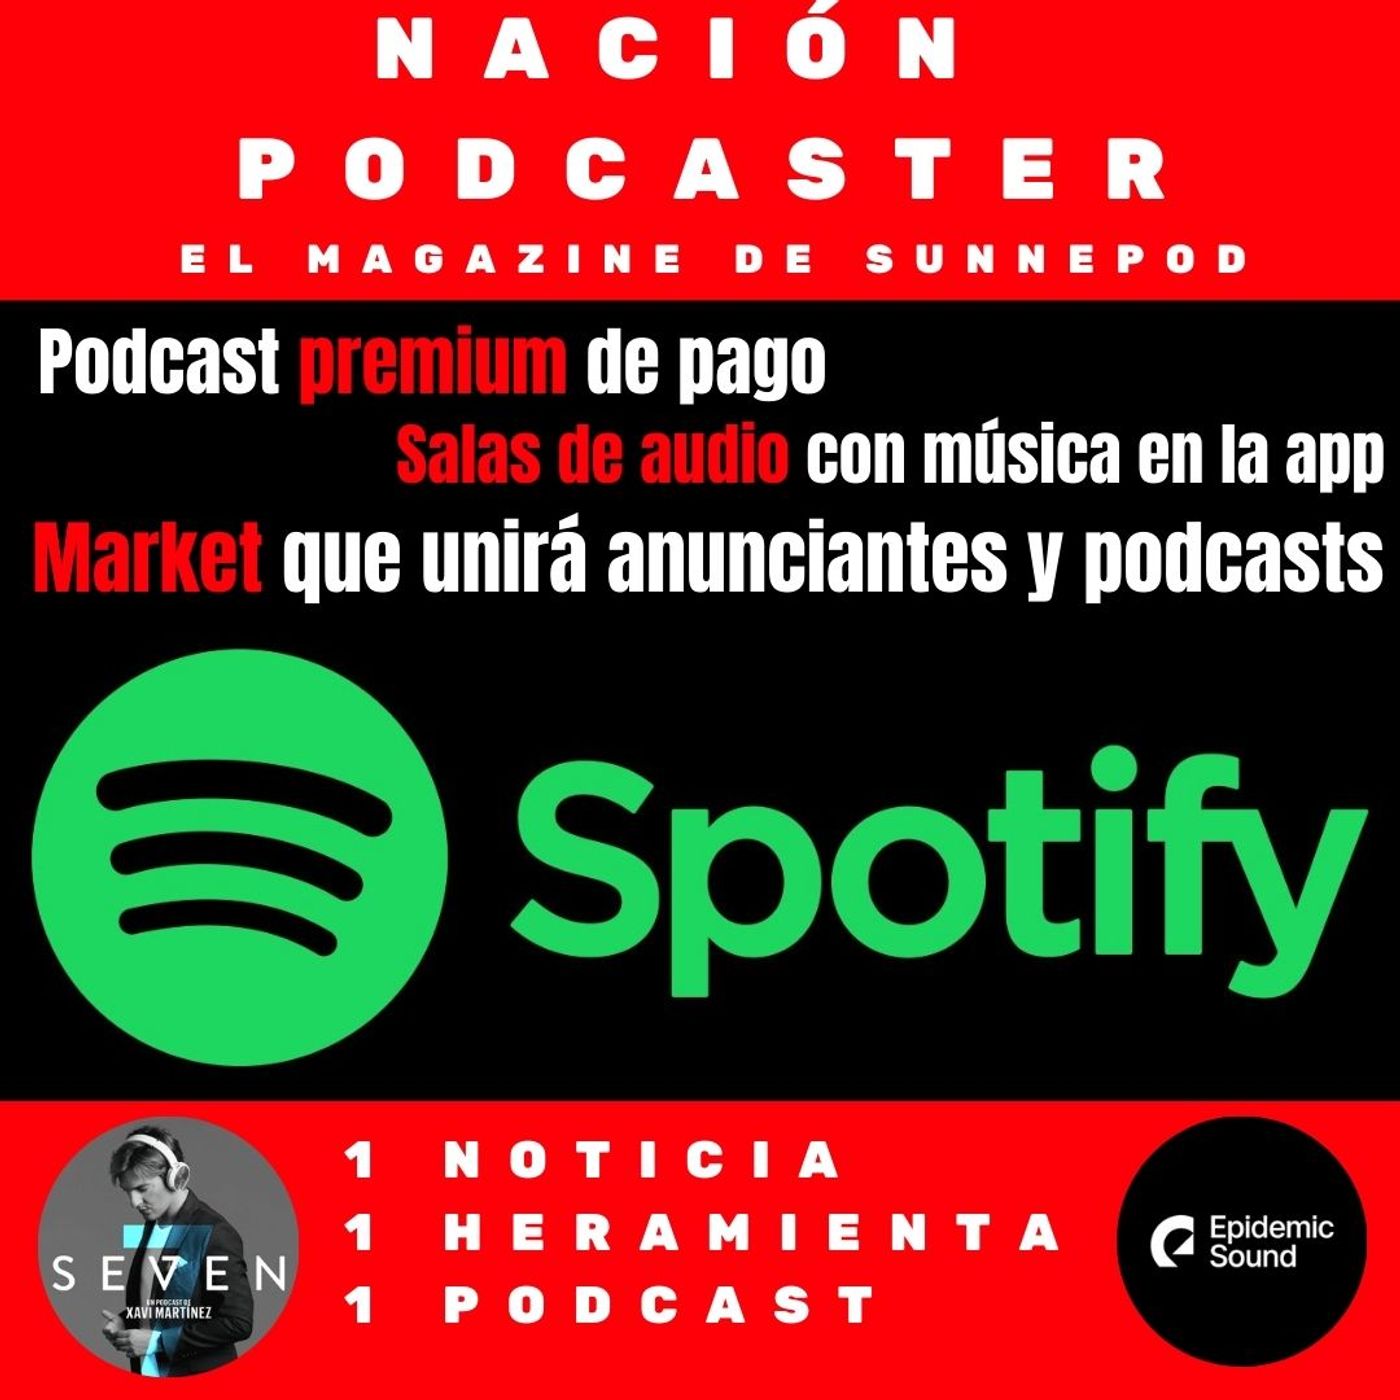 3 noticias sobre Spotify, Epidemic sound y Seven Podcast de @xavimartinez